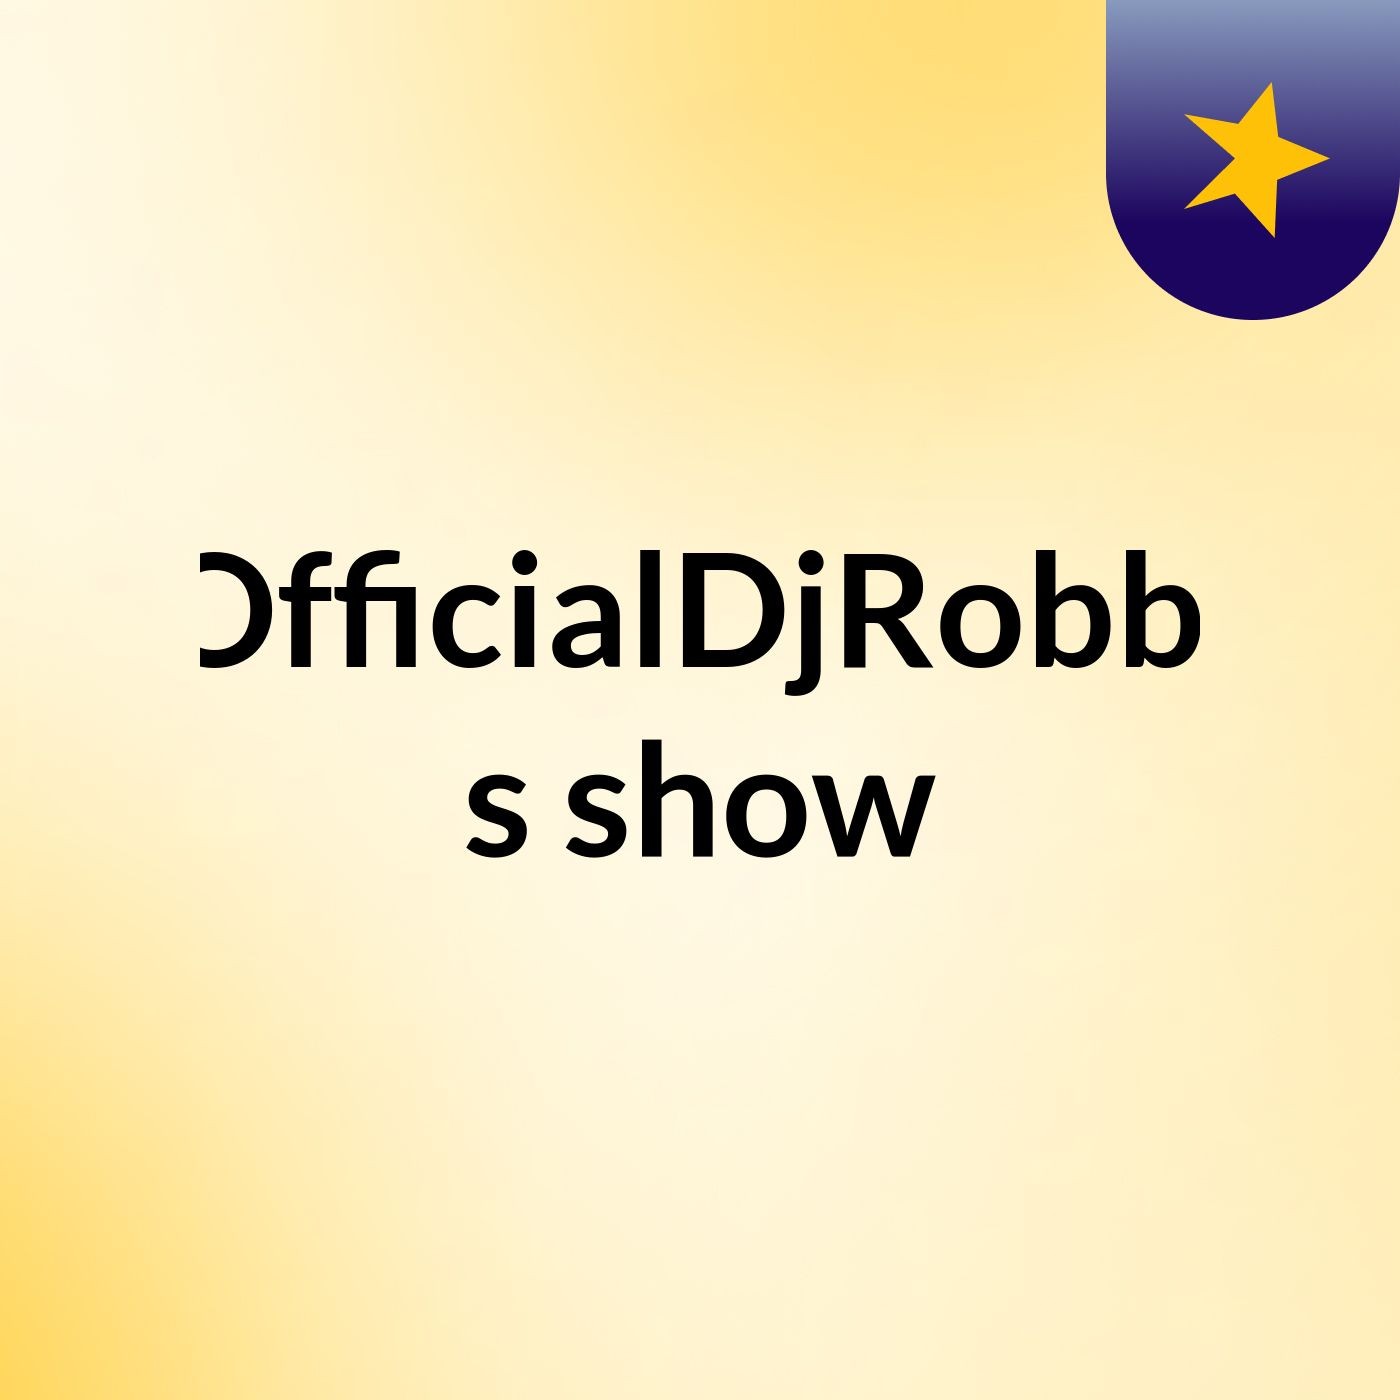 OfficialDjRobbi's show